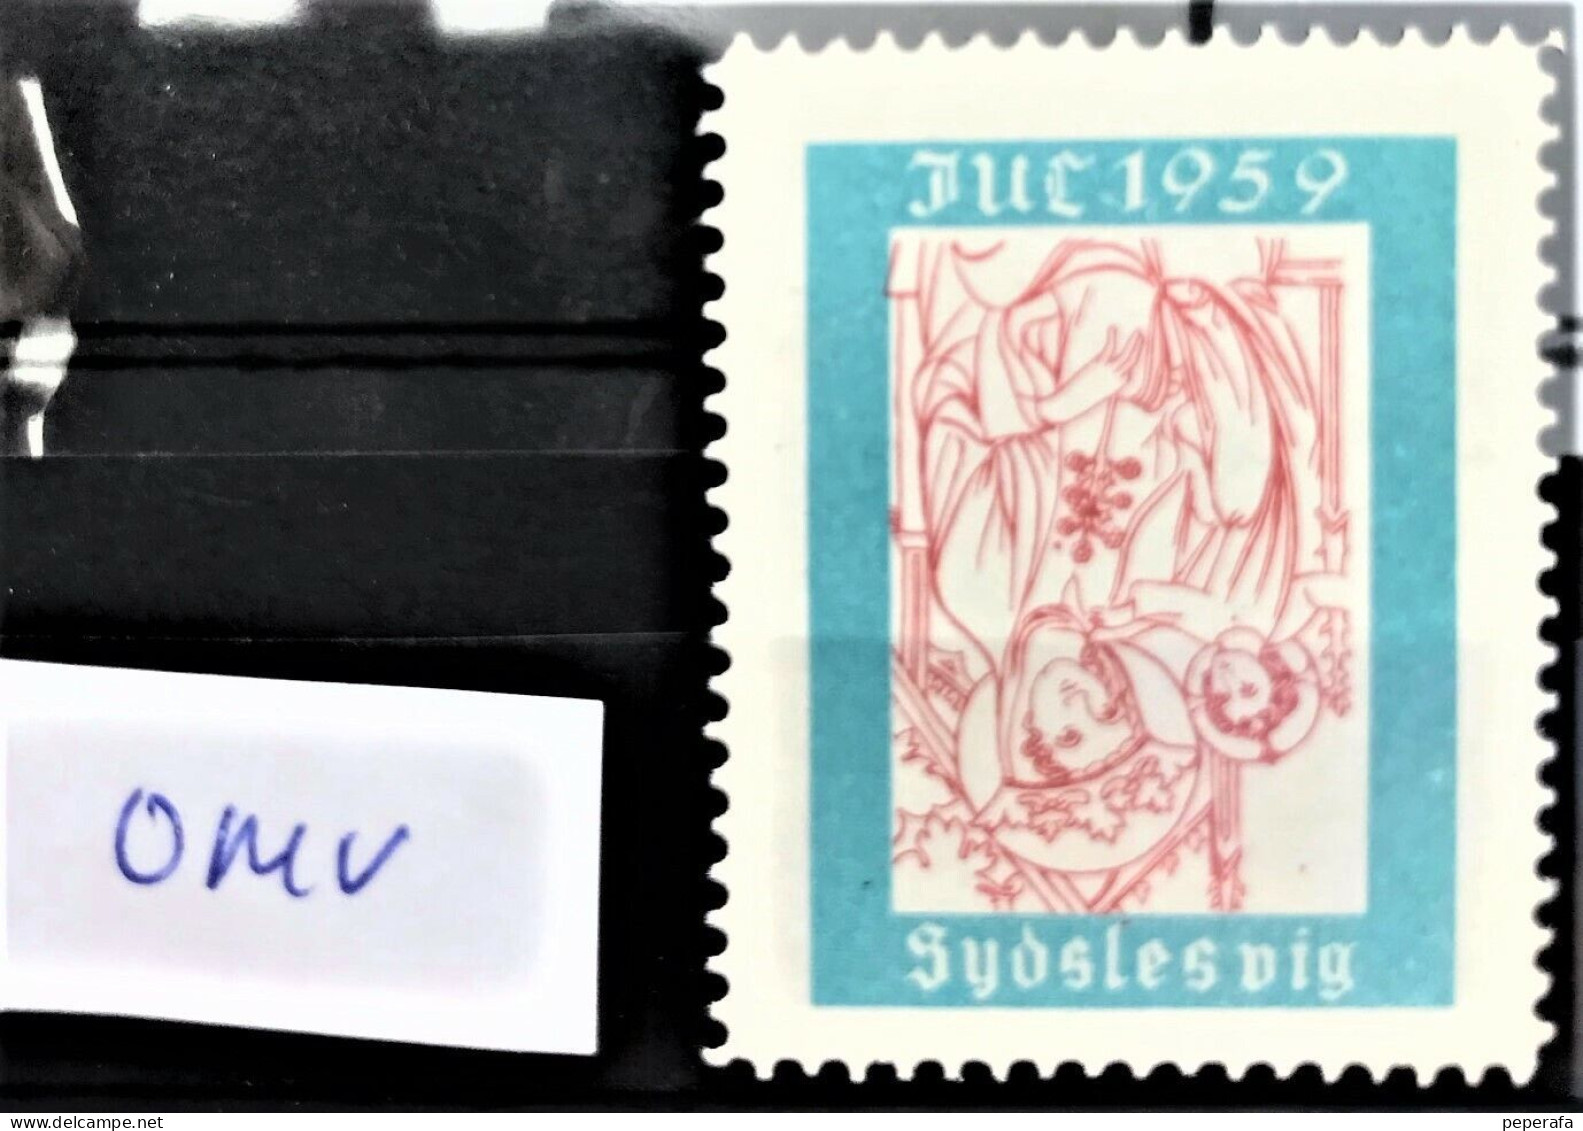 Denmark SYDSLESVIG 1959 Jul Julemærke Christmas Poster Stamp Vignette OMV!! RARE - Abarten Und Kuriositäten